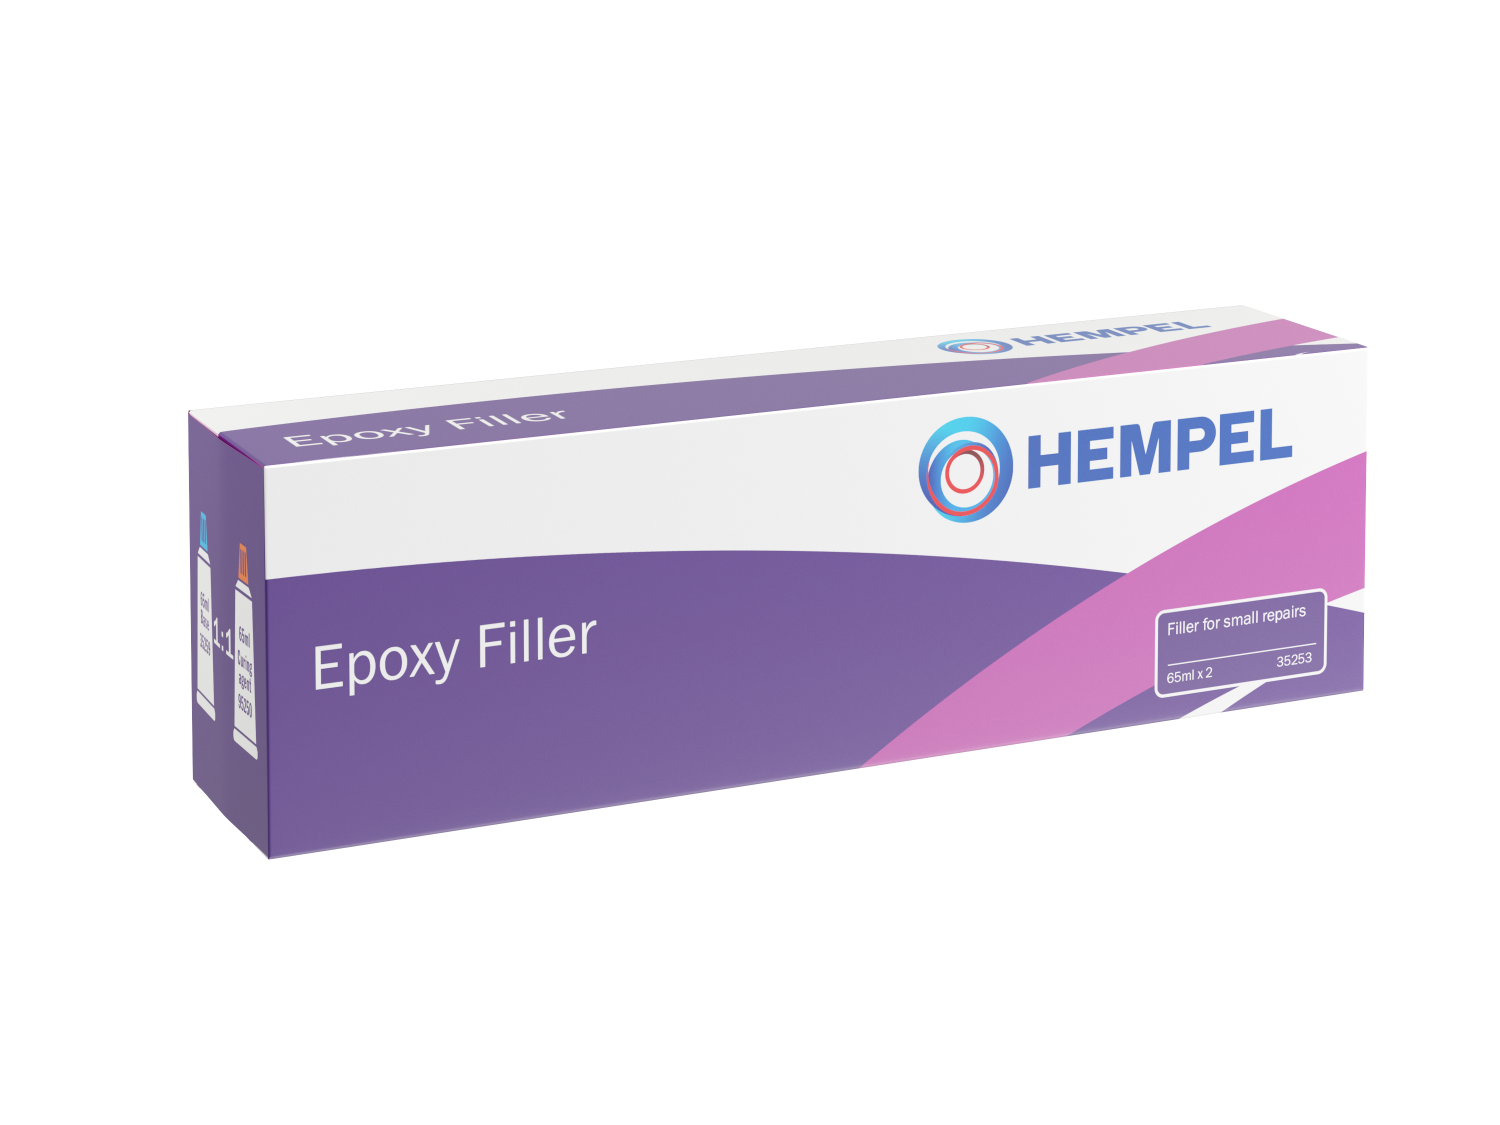 Hempel EPOXY FILLER 130 ml.